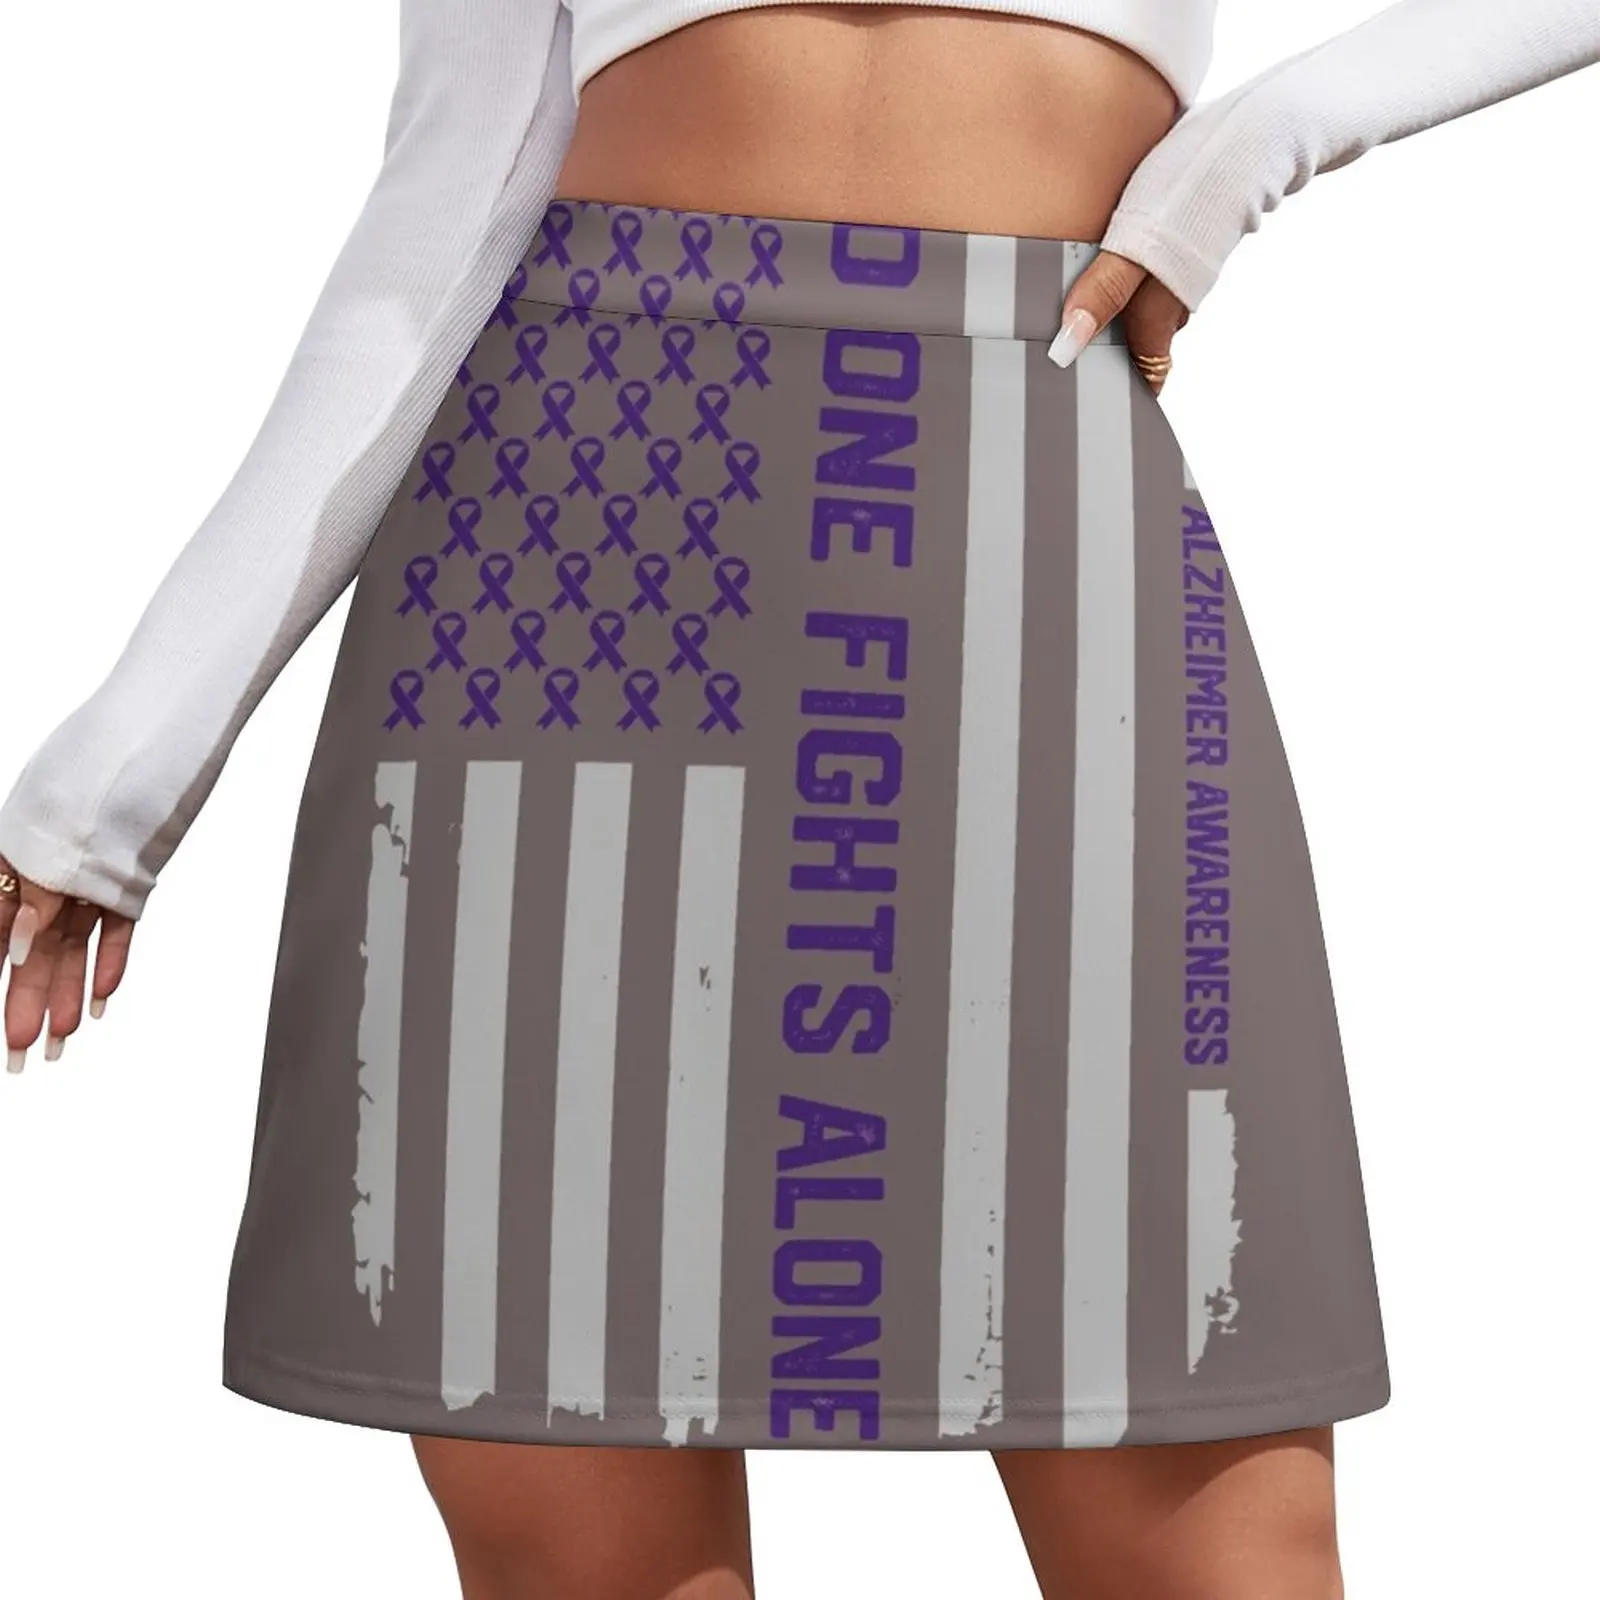 Alzheimer's Awareness Shirts - Alzheimers Awareness American Flag Mini Skirt shorts kawaii skirt anti flag american reckoning 1 cd